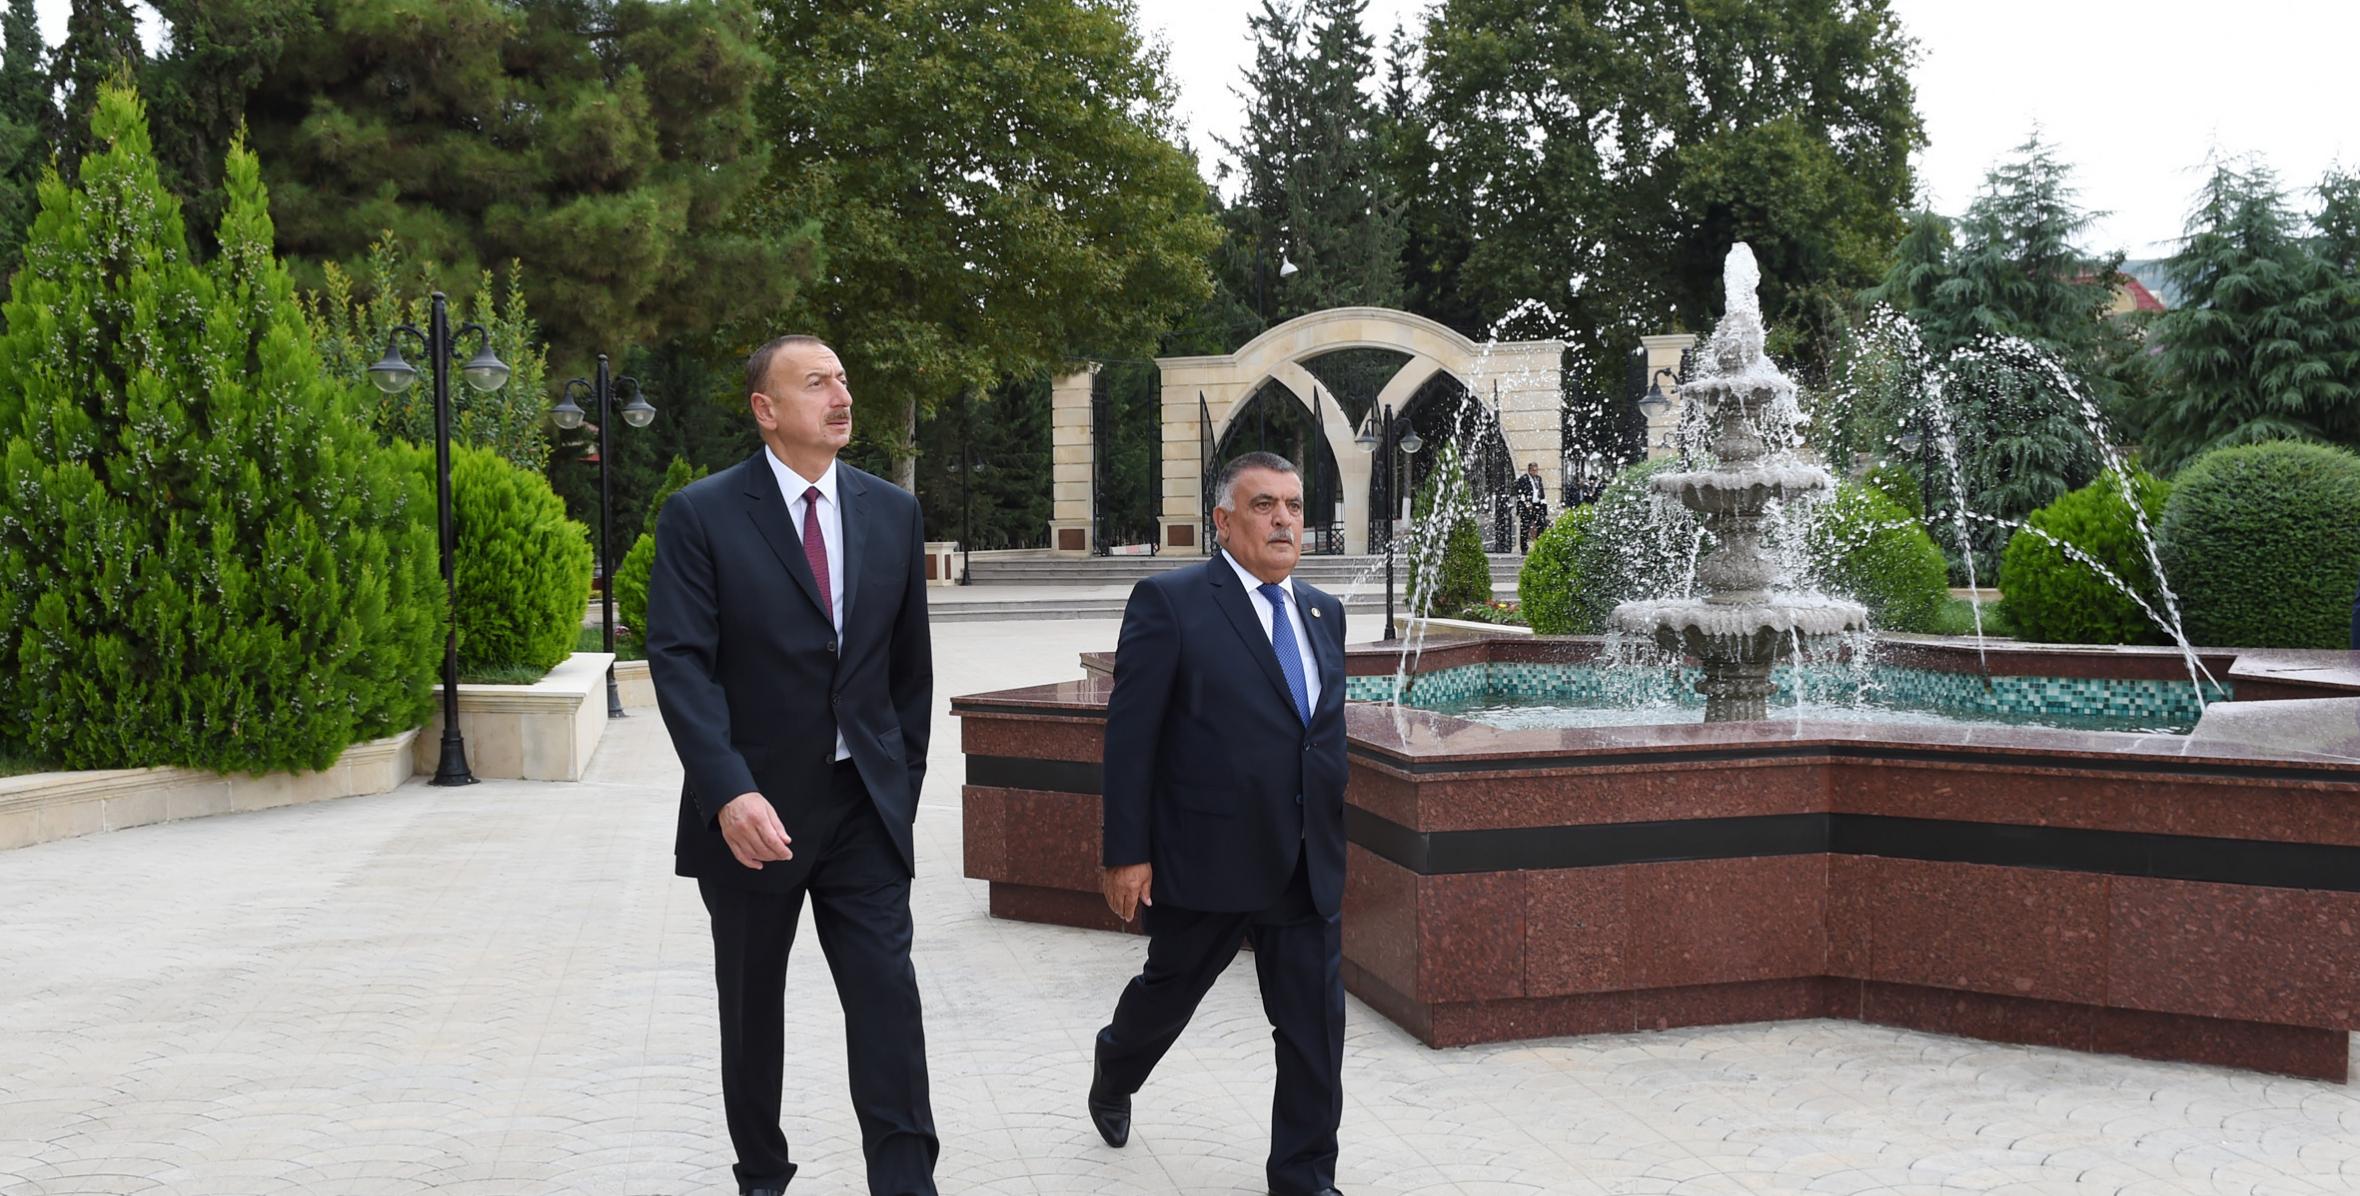 Ilham Aliyev arrived in Aghsu District